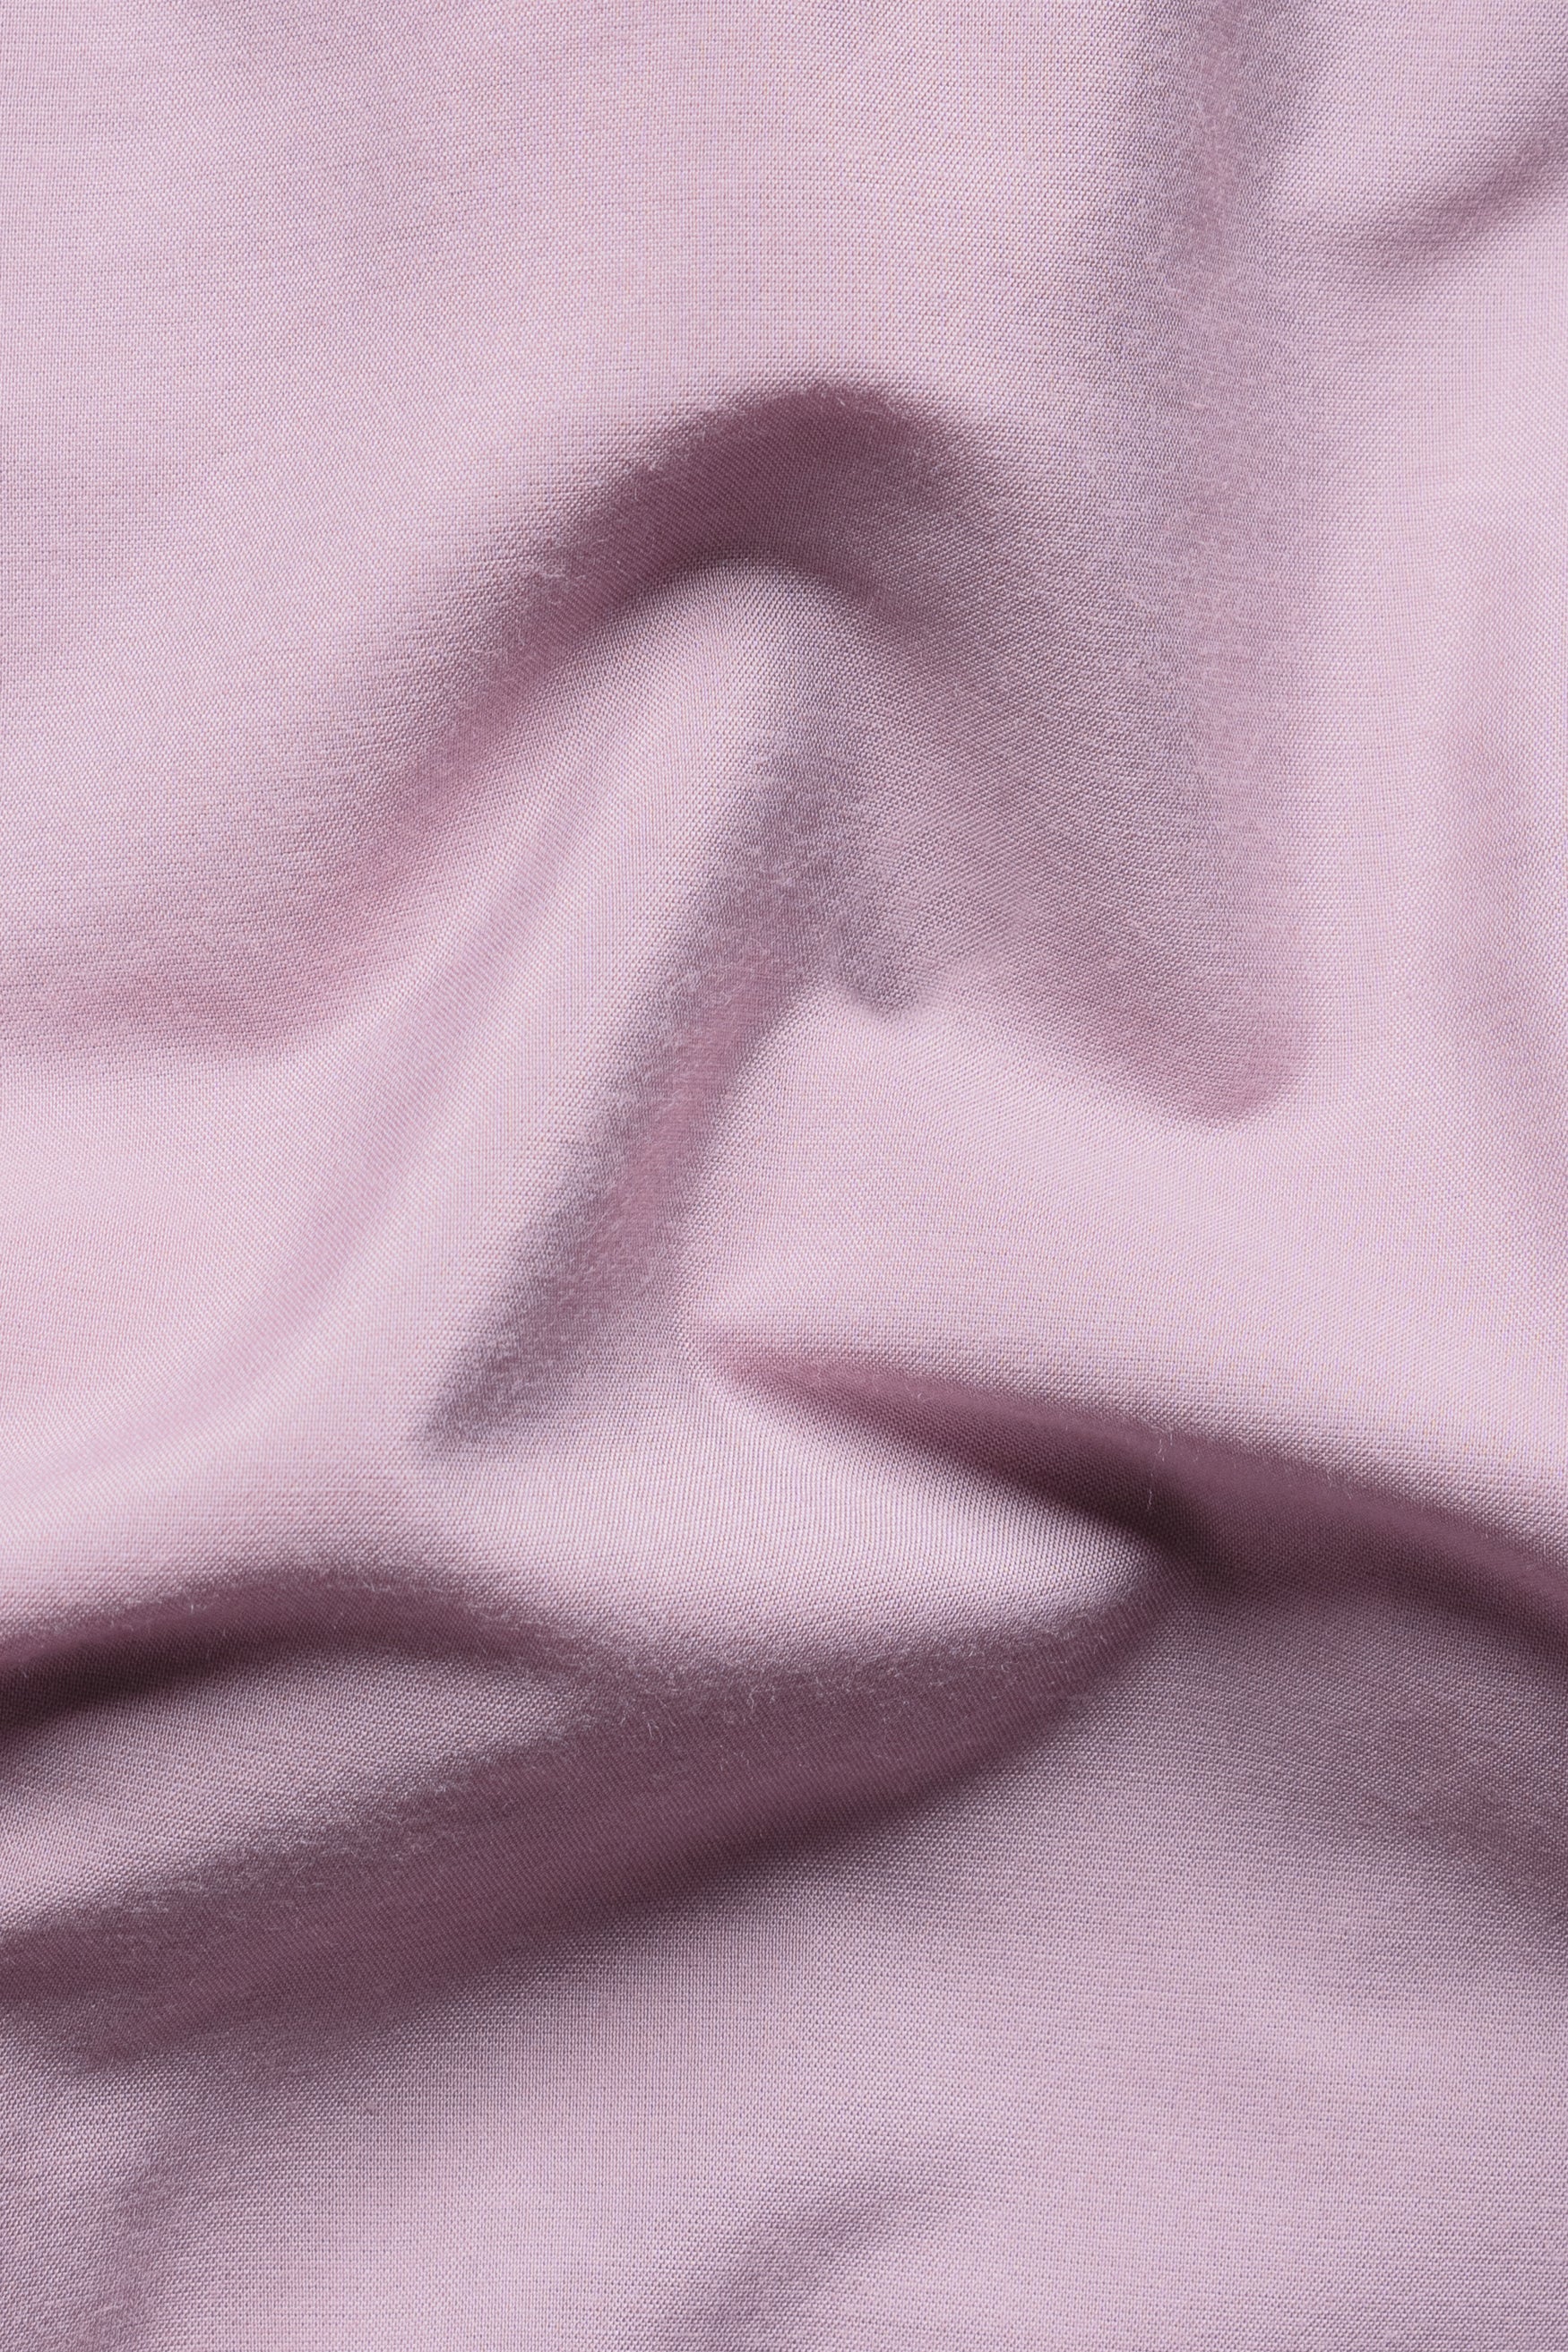 Thistle Pink Kurta Set with Blossom Pink Chevron Thread Embroidered Designer Nehru Jacket KPNJ015-44,  KPNJ015-46,  KPNJ015-48,  KPNJ015-50,  KPNJ015-52,  KPNJ015-54,  KPNJ015-56,  KPNJ015-58,  KPNJ015-60